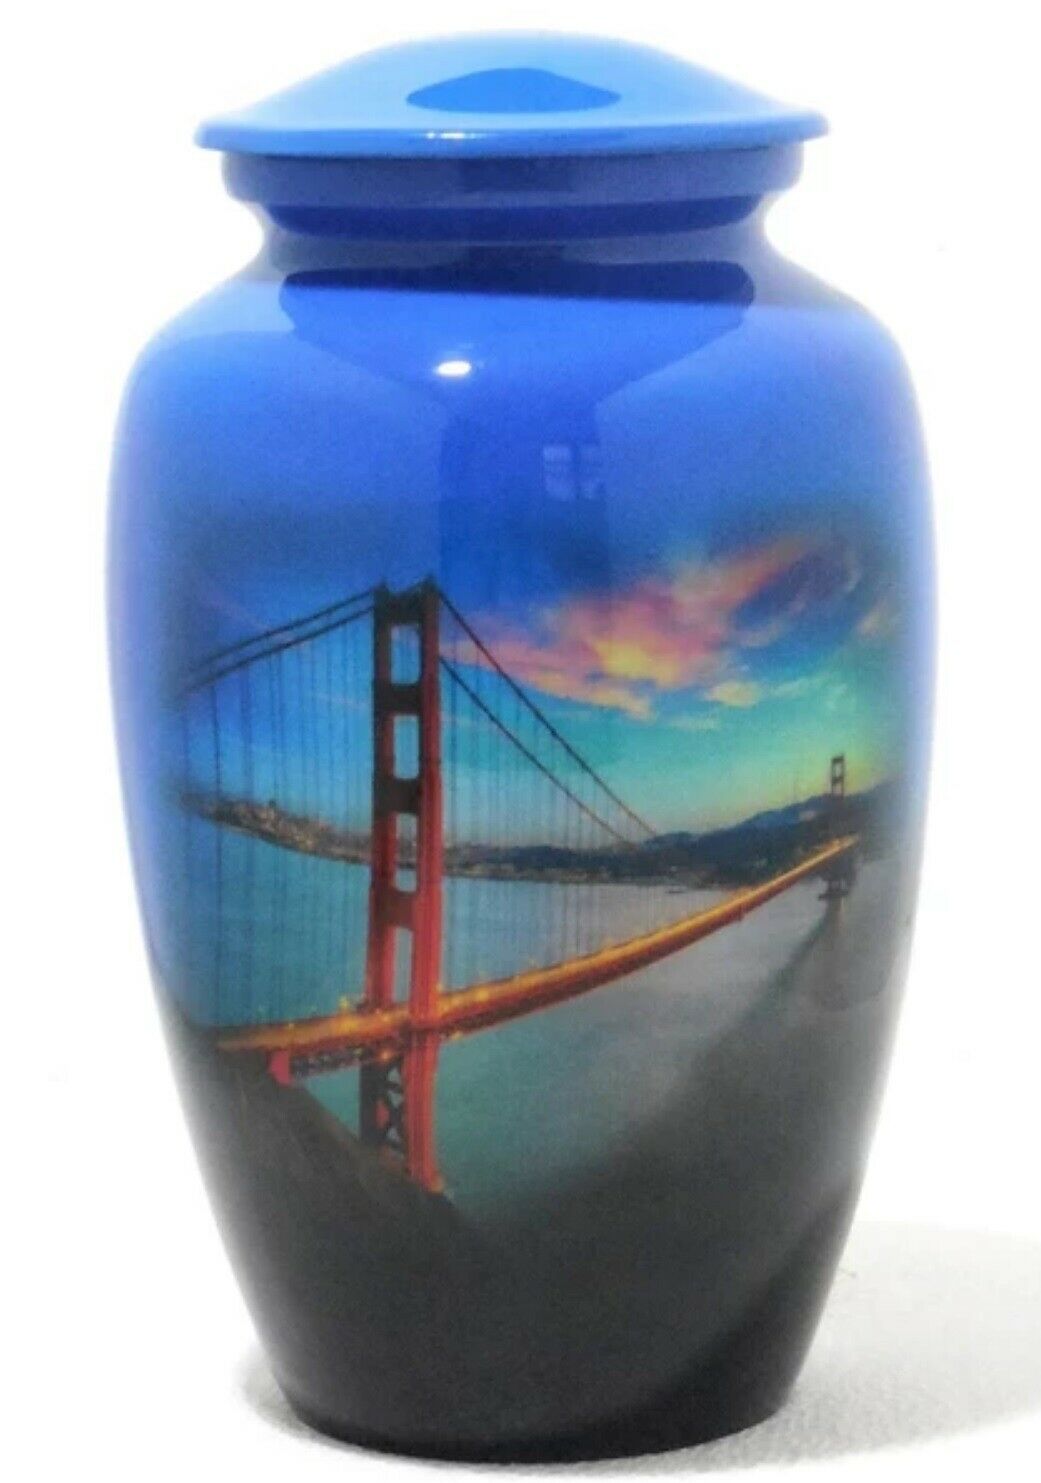 Small/Keepsake 3 Cubic Inch Golden Gate Bridge Aluminum Cremation Urn for Ashes